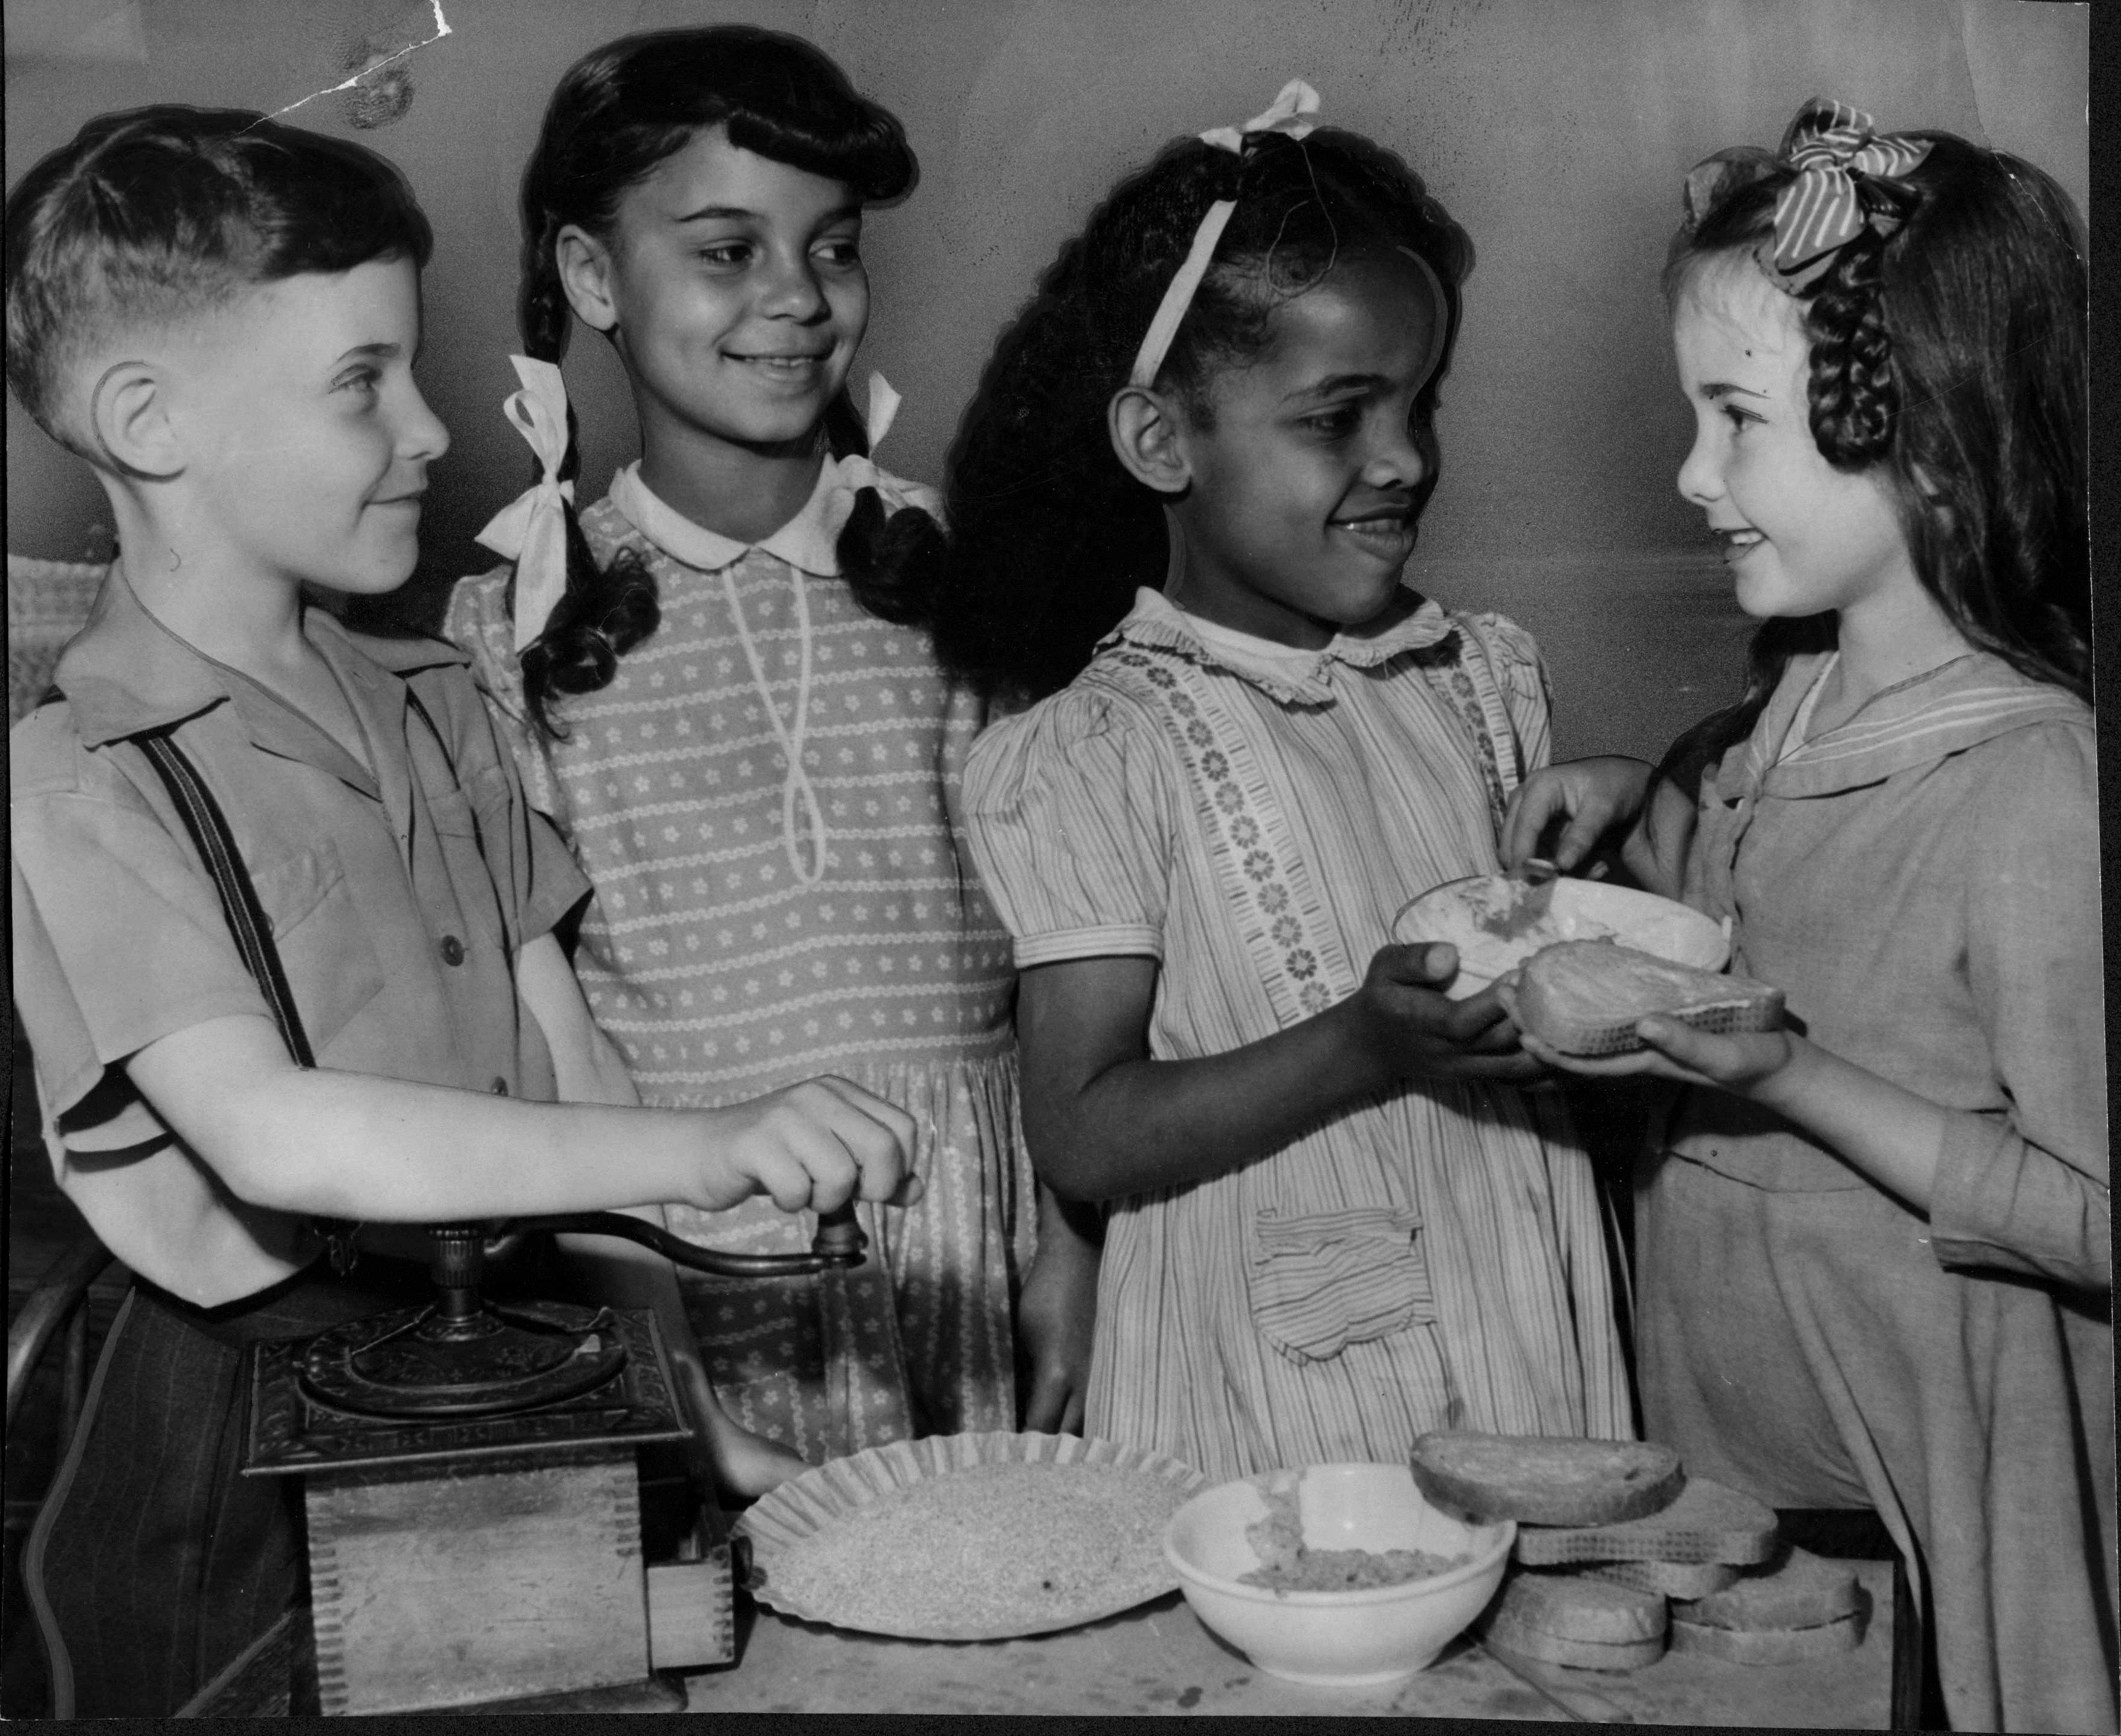 human relations training among children, 1946, northside, image 1, side 1